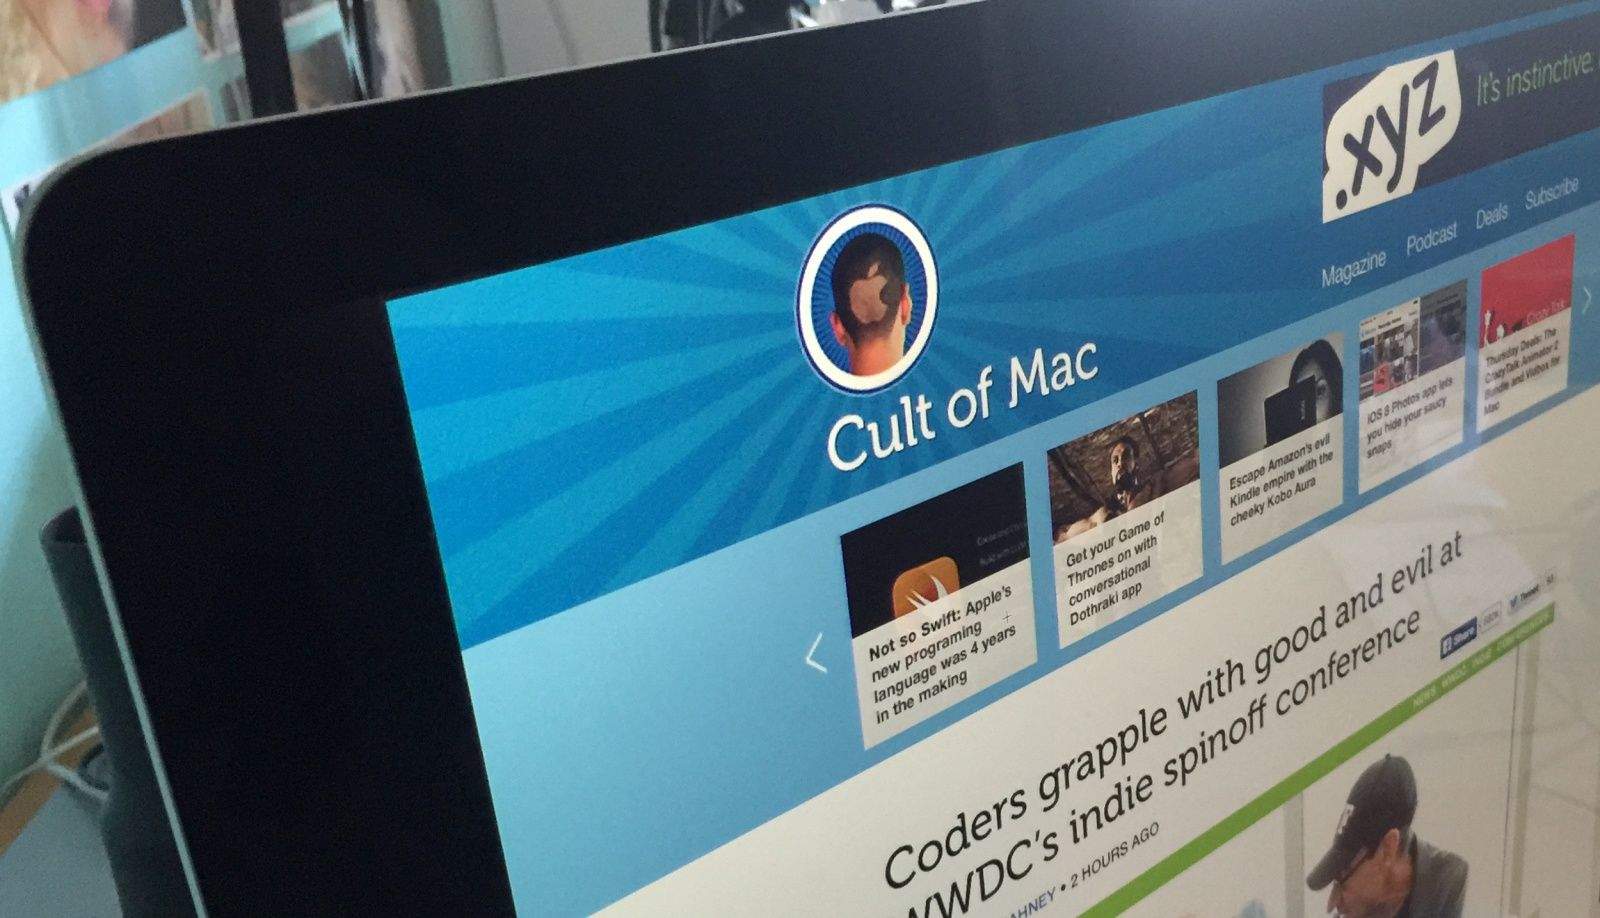 We've redesigned the Cult of Mac website.